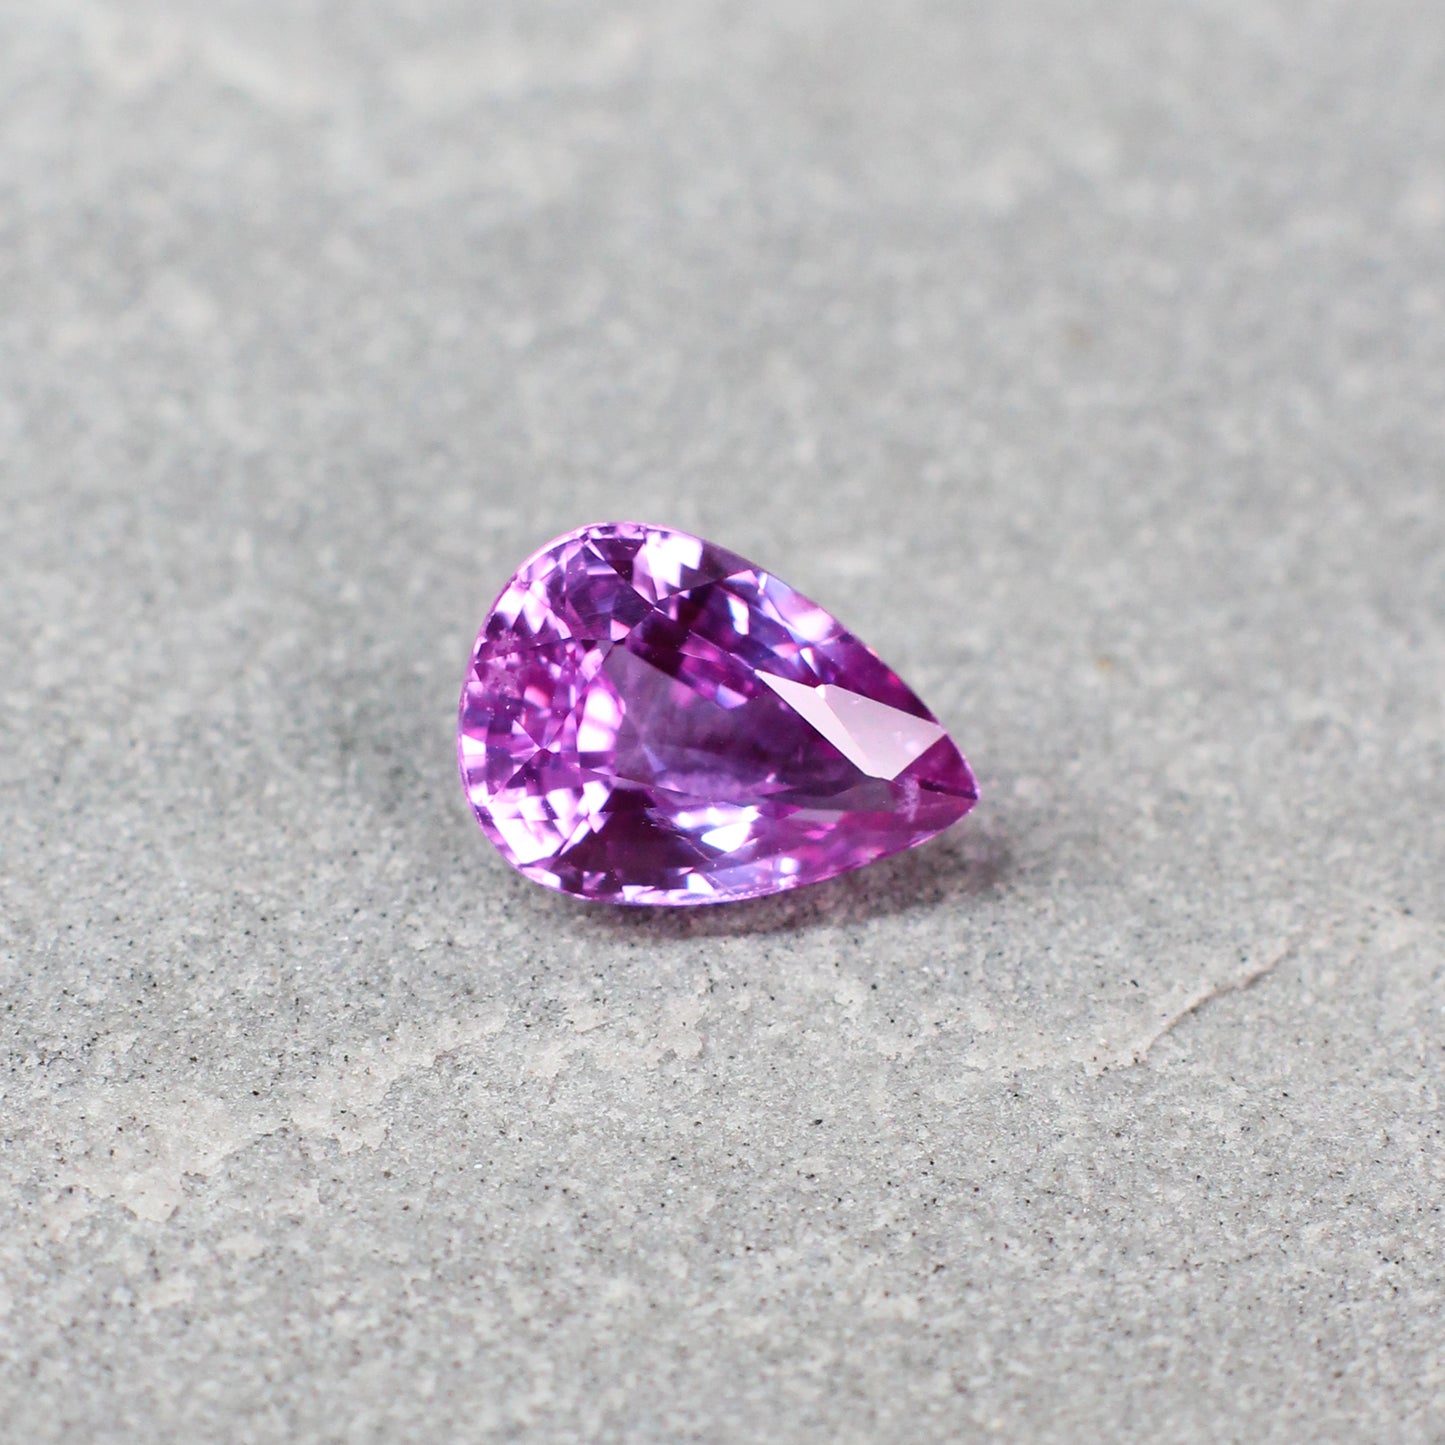 1.91ct Purplish Pink, Pear Shape Sapphire, Heated, Madagascar - 9.34 x 6.64 x 4.06mm